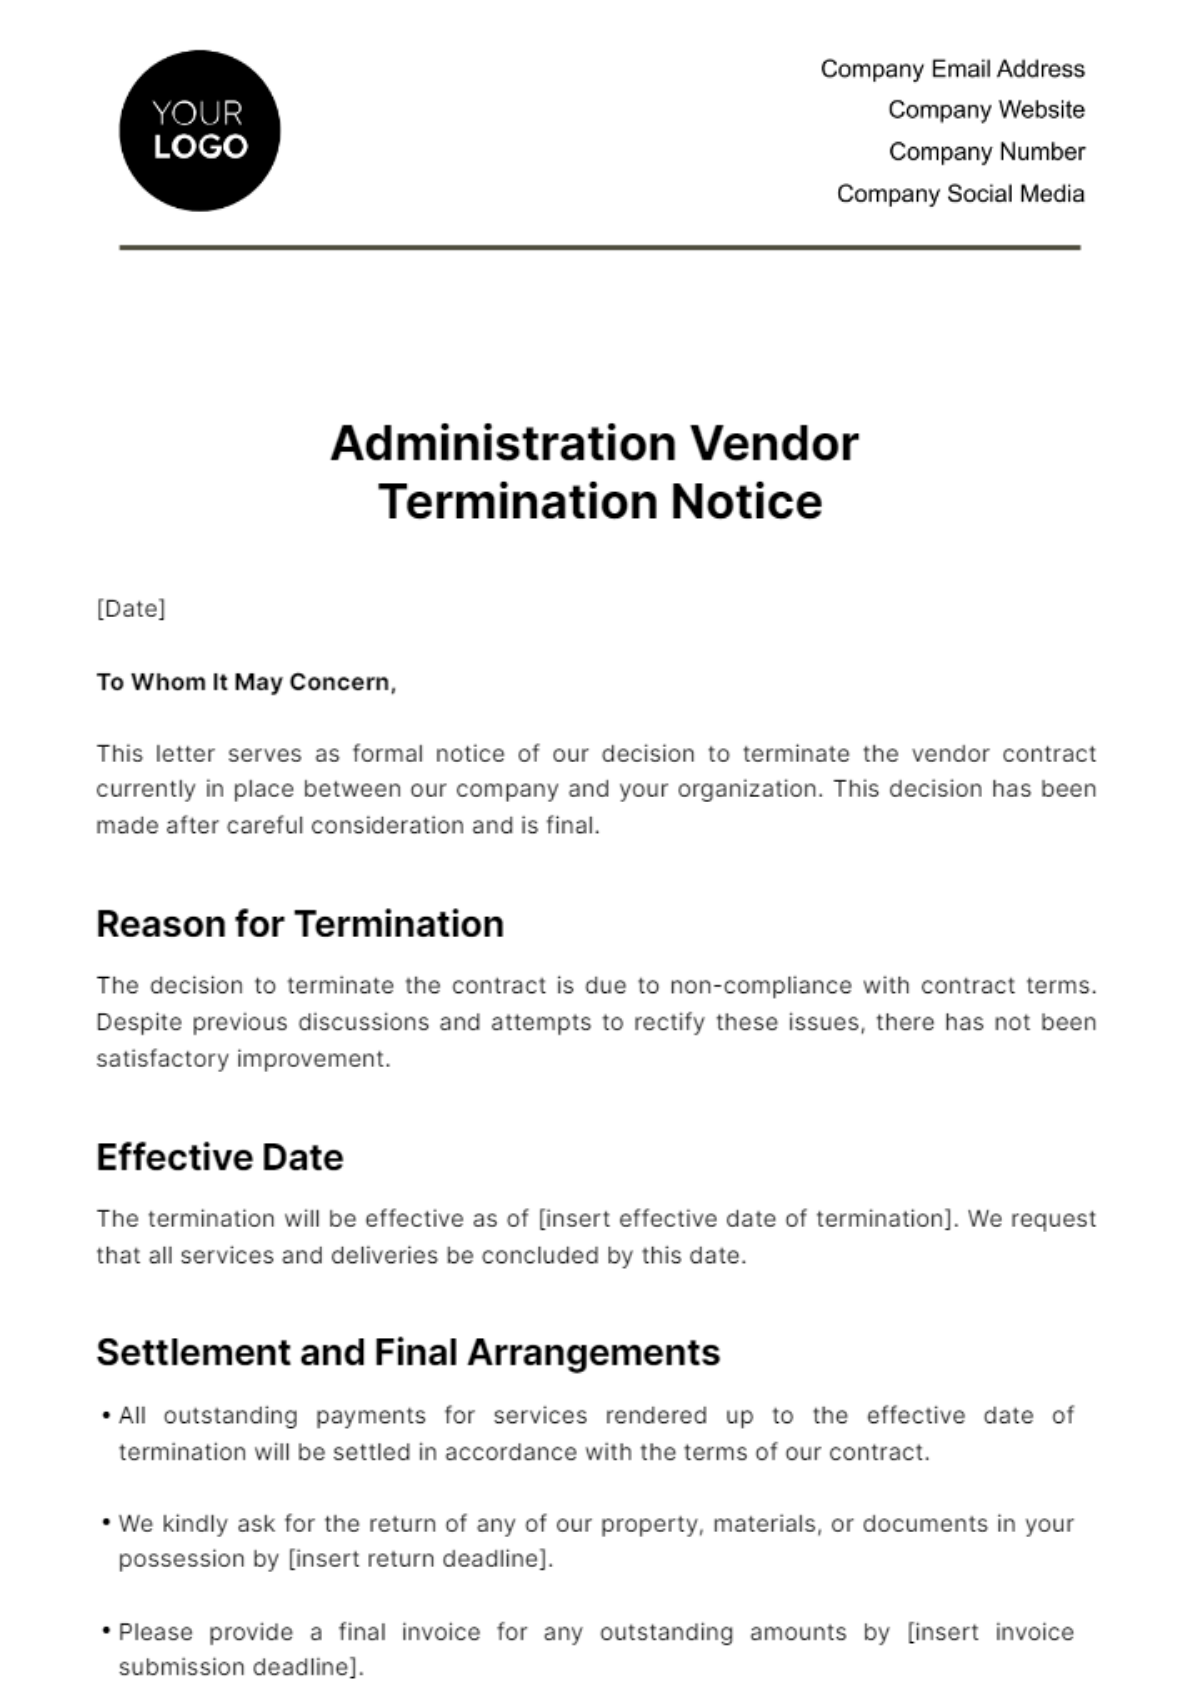 Free Administration Vendor Termination Notice Template